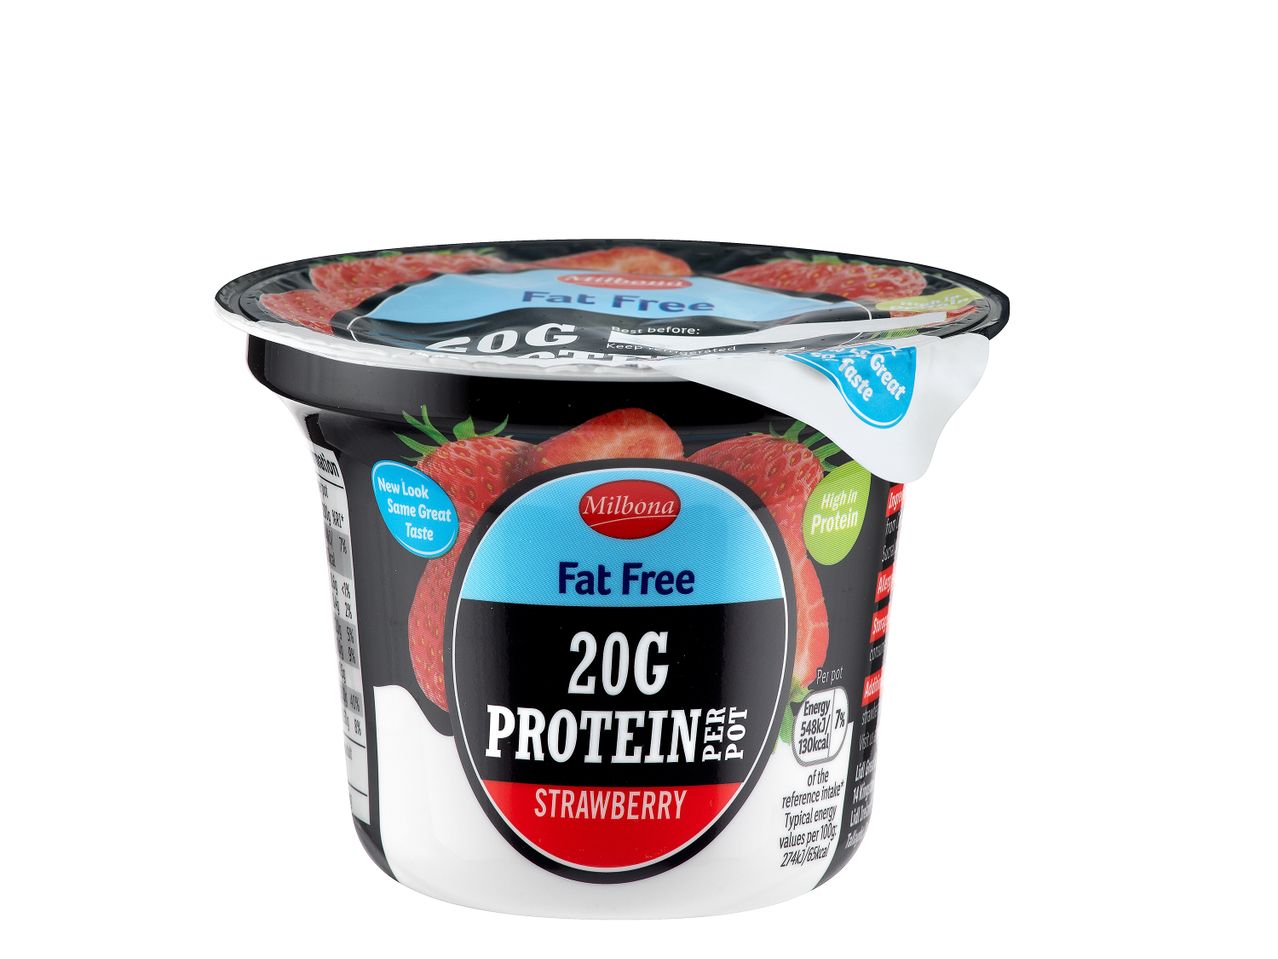 Go to full screen view: Milbona Fat Free High Protein Yoghurt - Image 3